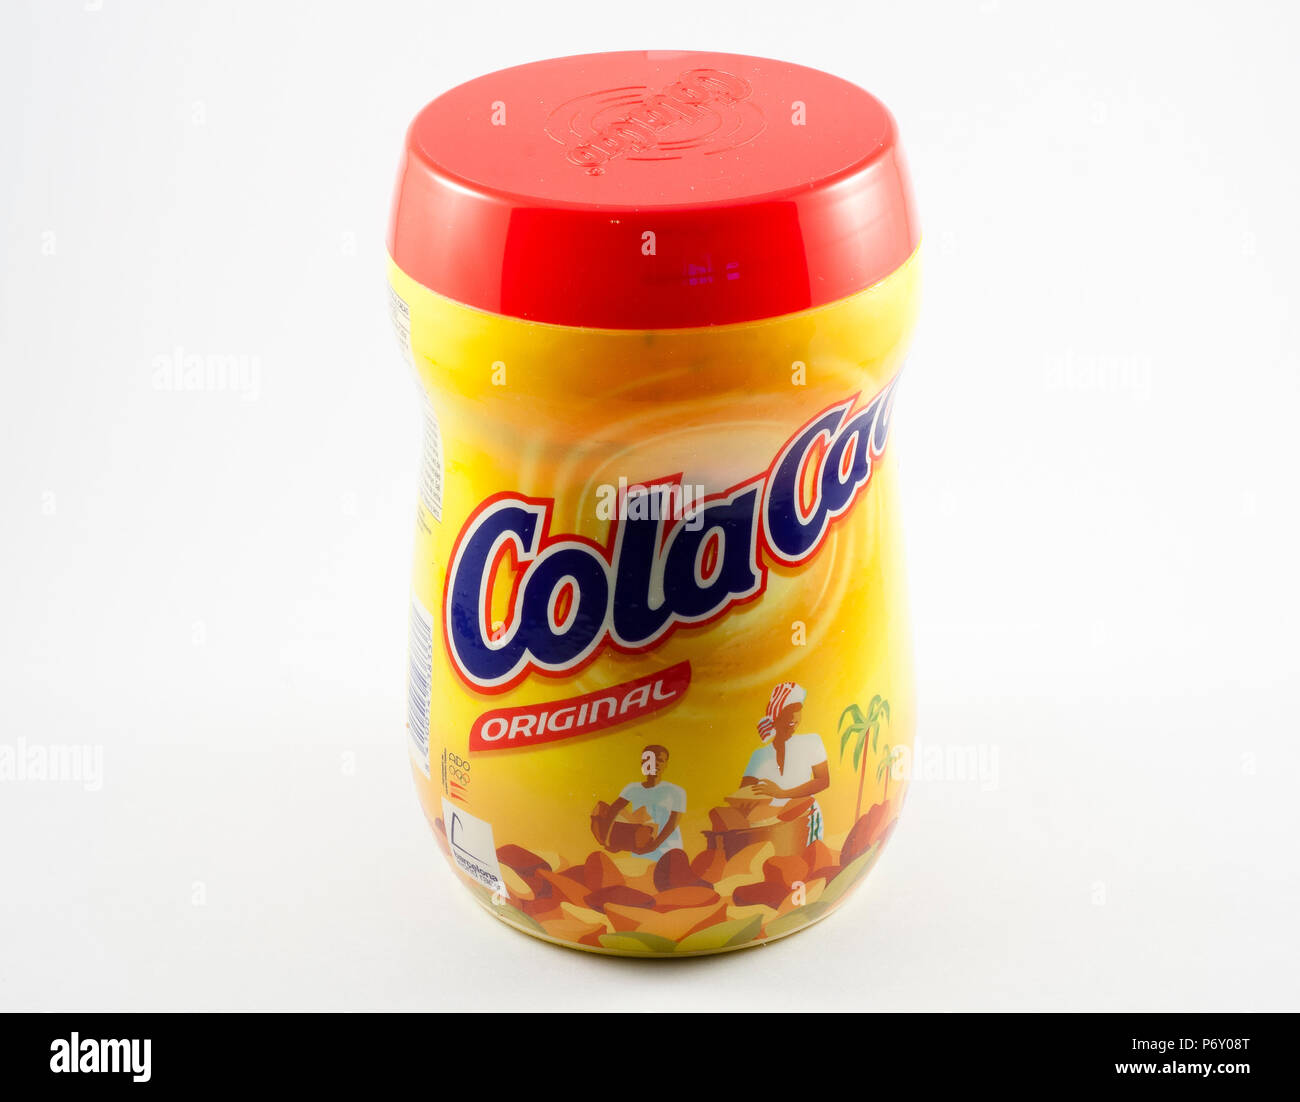 Cola Cao Chocolate Powder Drink